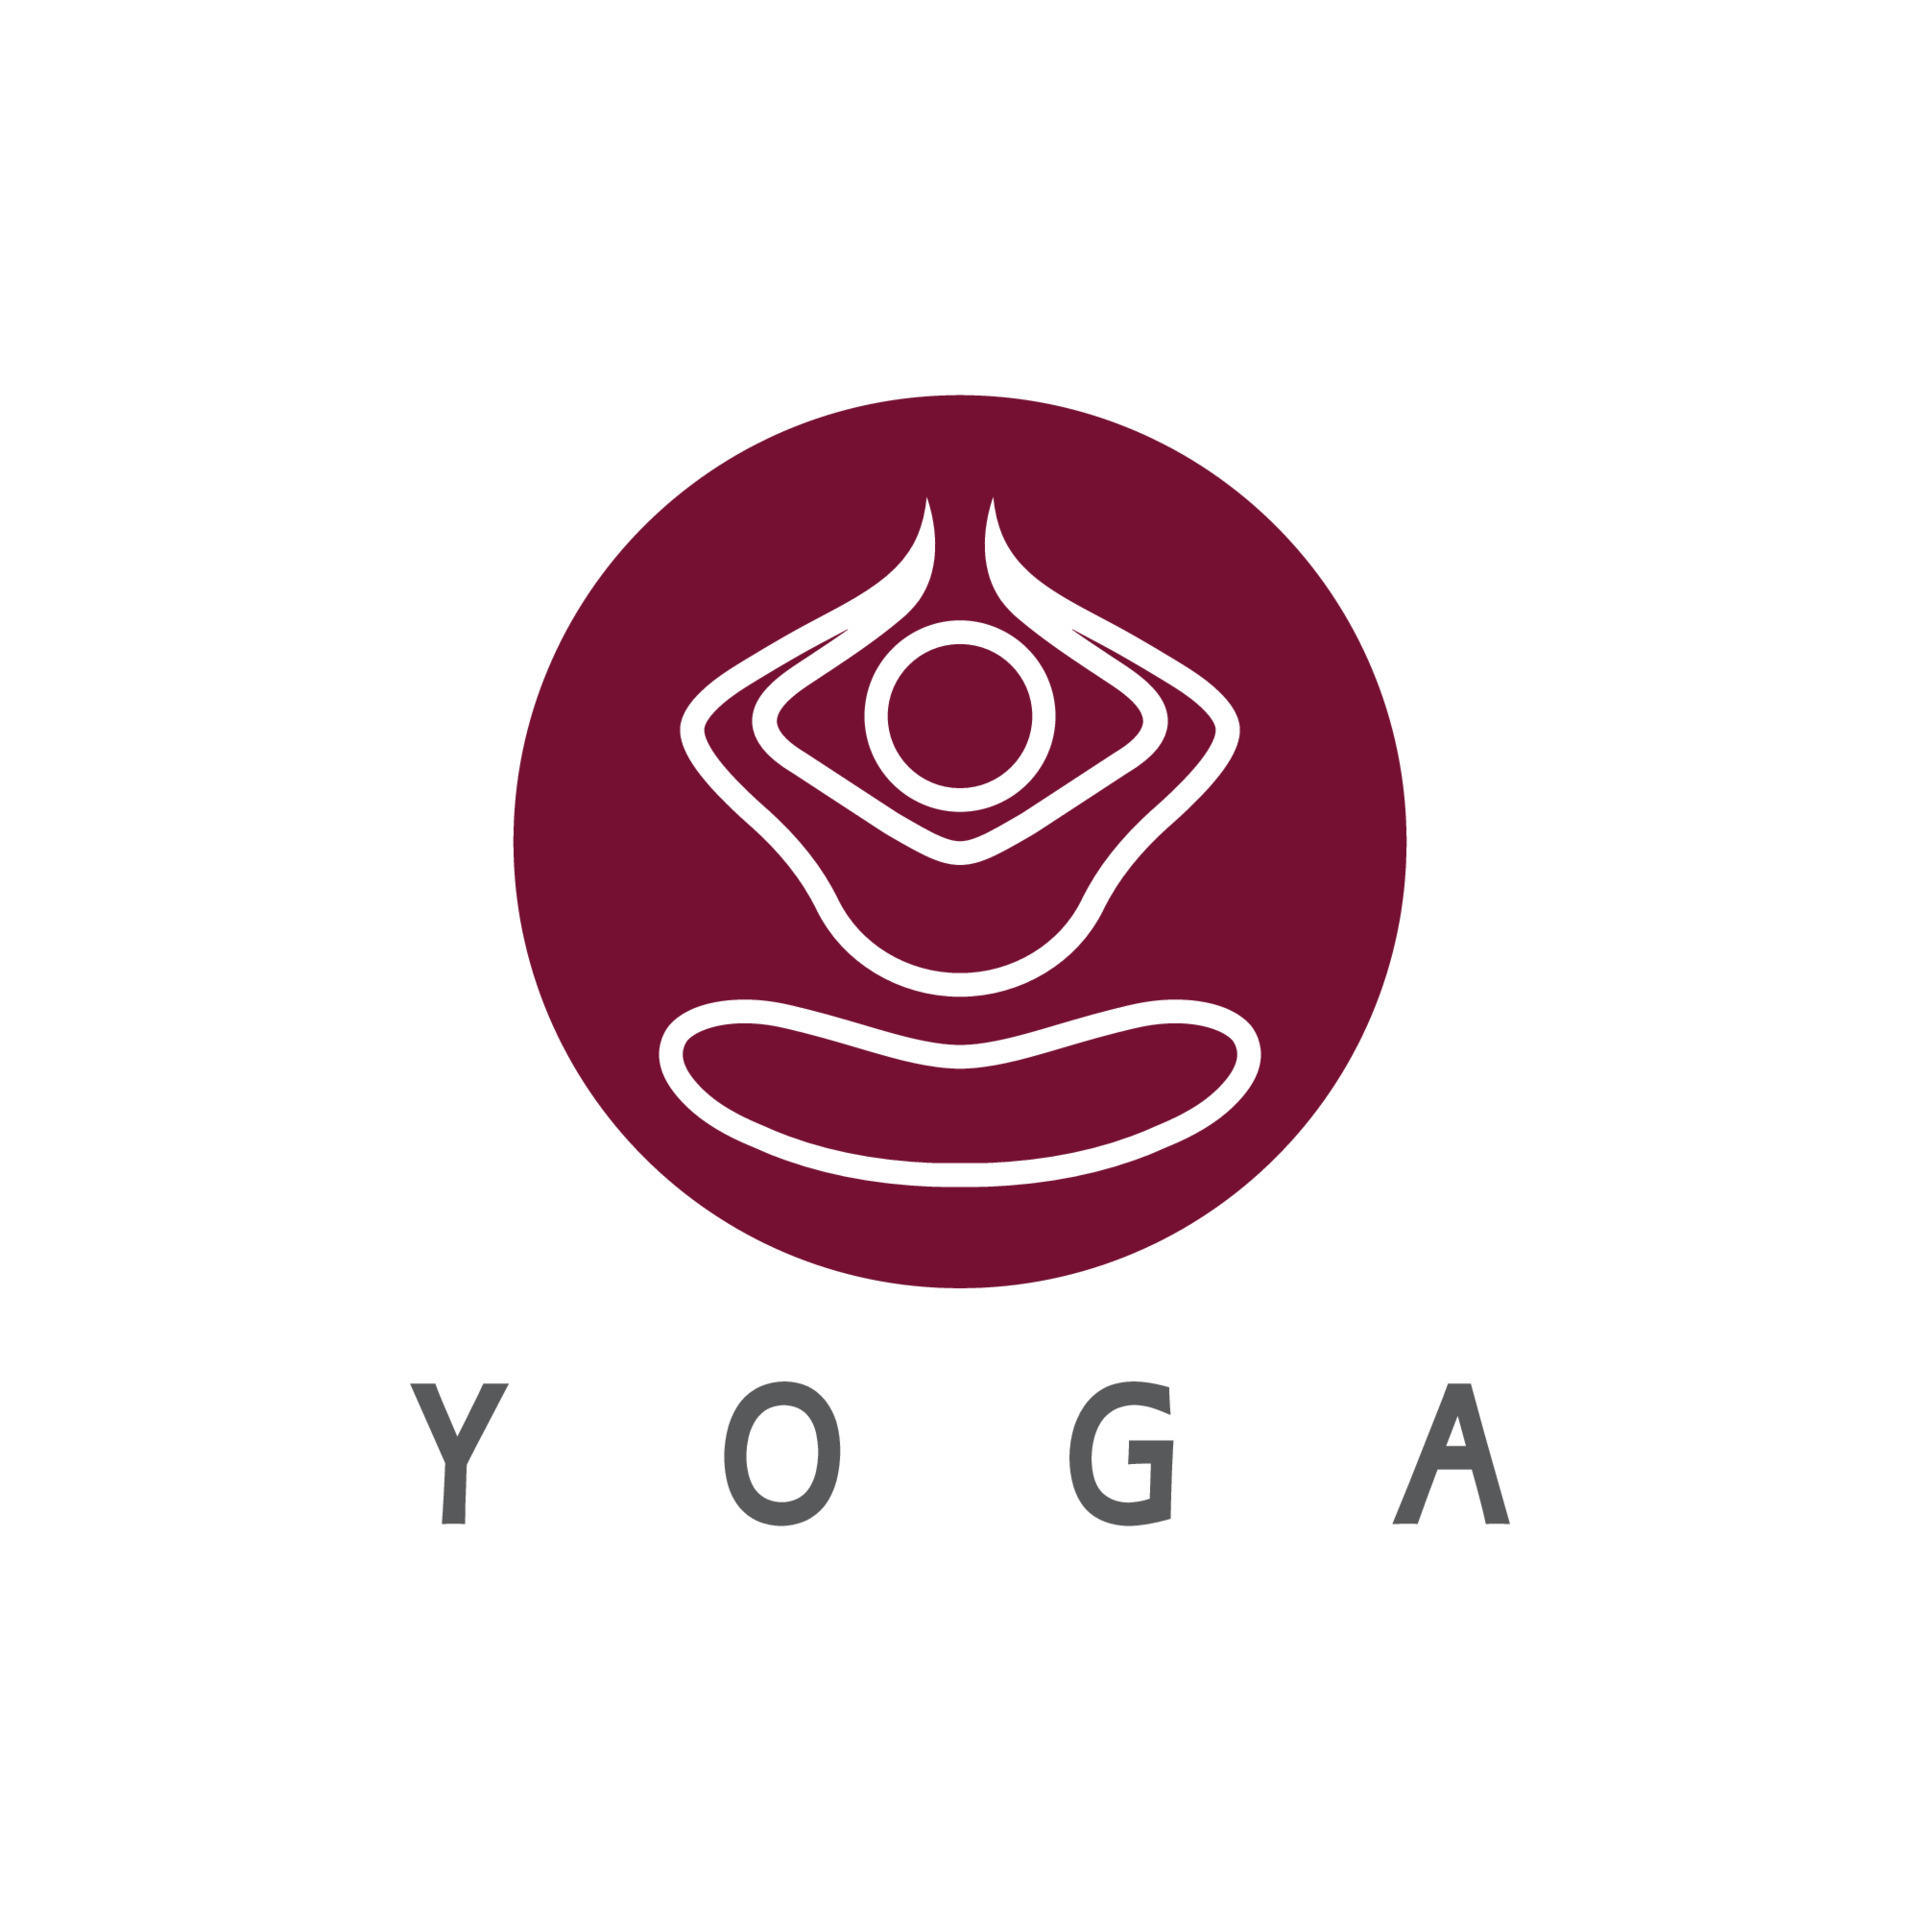 logo design of people doing yoga symbol icon illustration vector ...